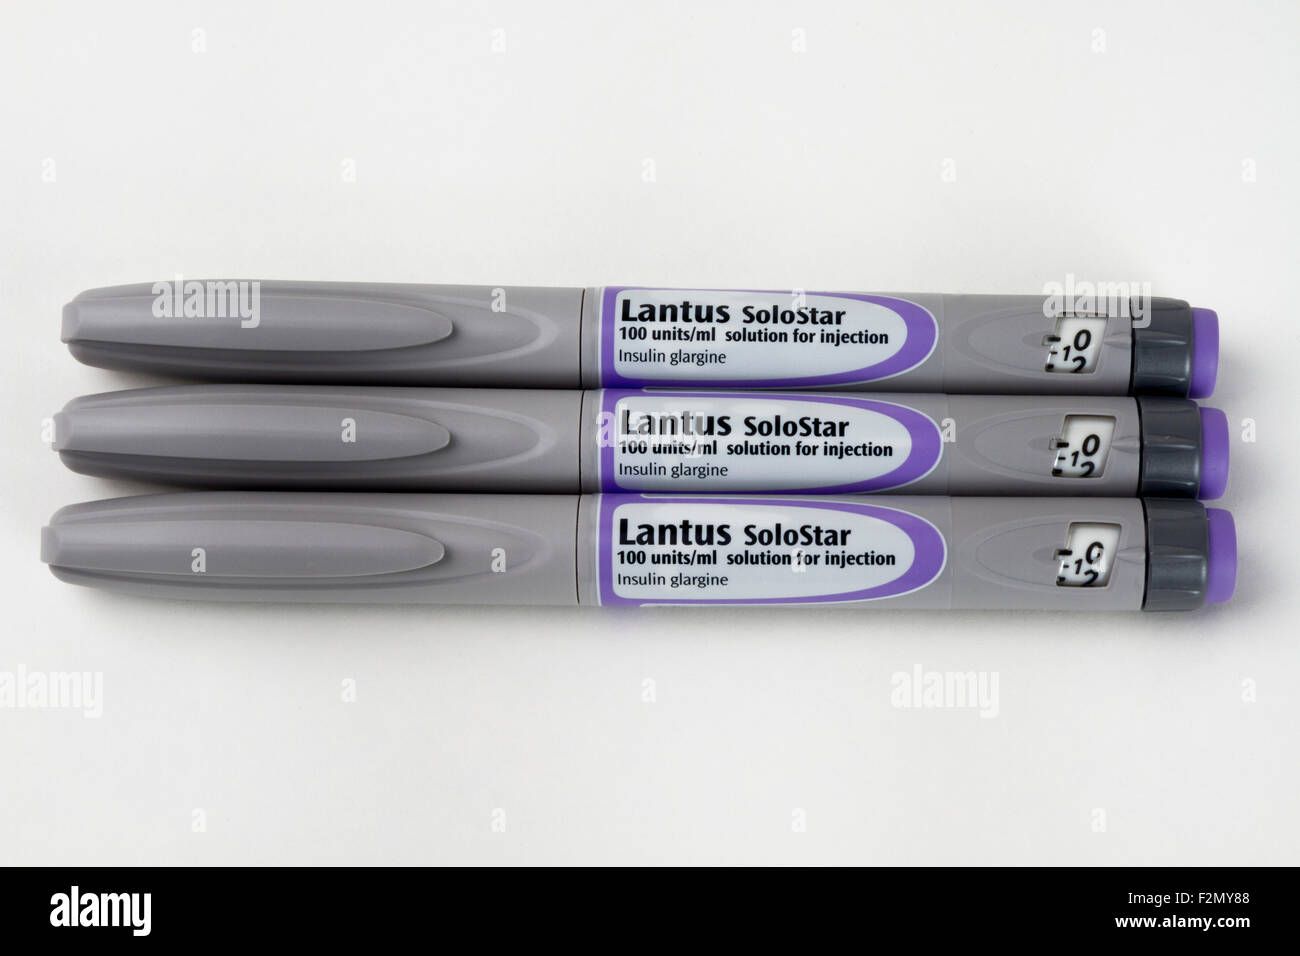 Lantus SoloStar penna per insulina siringhe Foto stock - Alamy